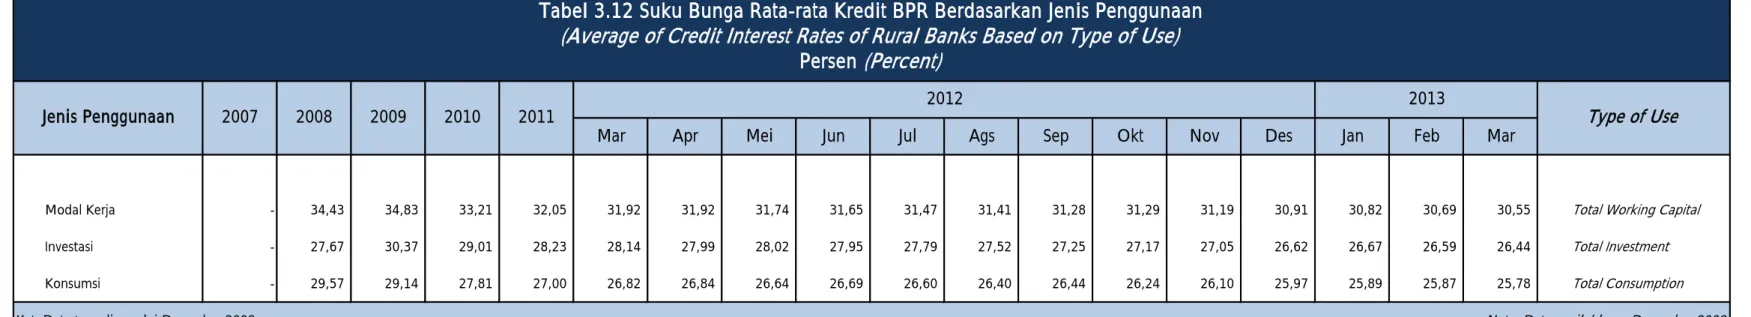 Tabel 3.12 Suku Bunga Rata-rata Kredit BPR Berdasarkan Jenis Penggunaan (Average of Credit Interest Rates of Rural Banks Based on Type of Use)